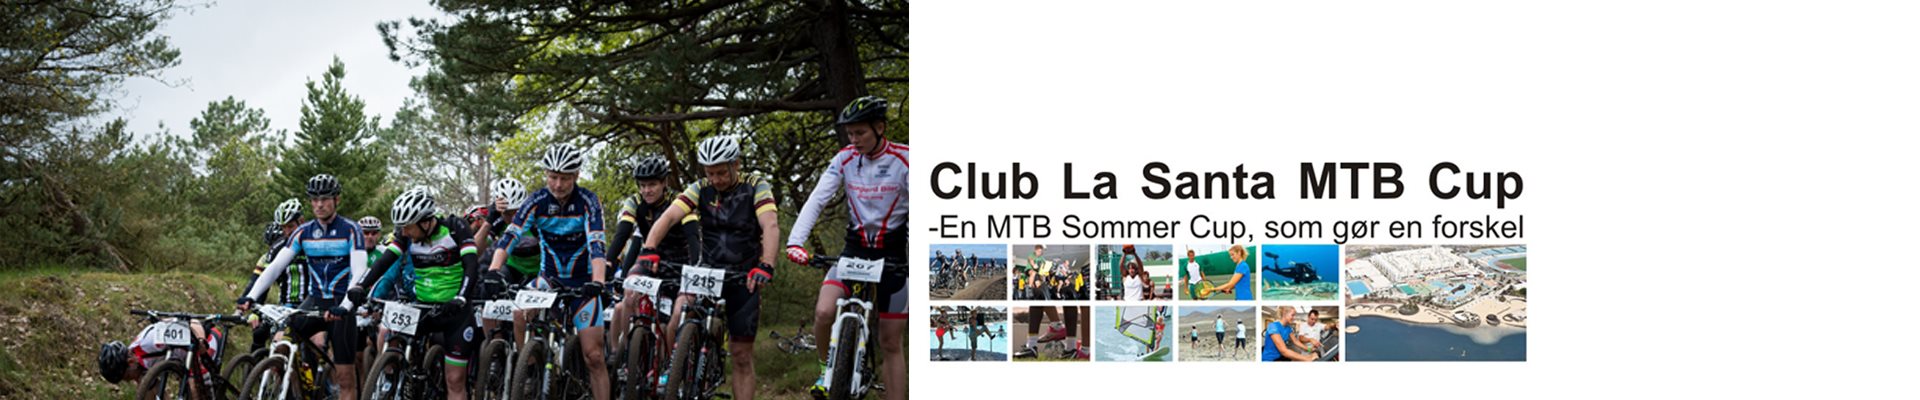 CLUB LA SANTA MTB CUP '18 - #6 Nymindegab